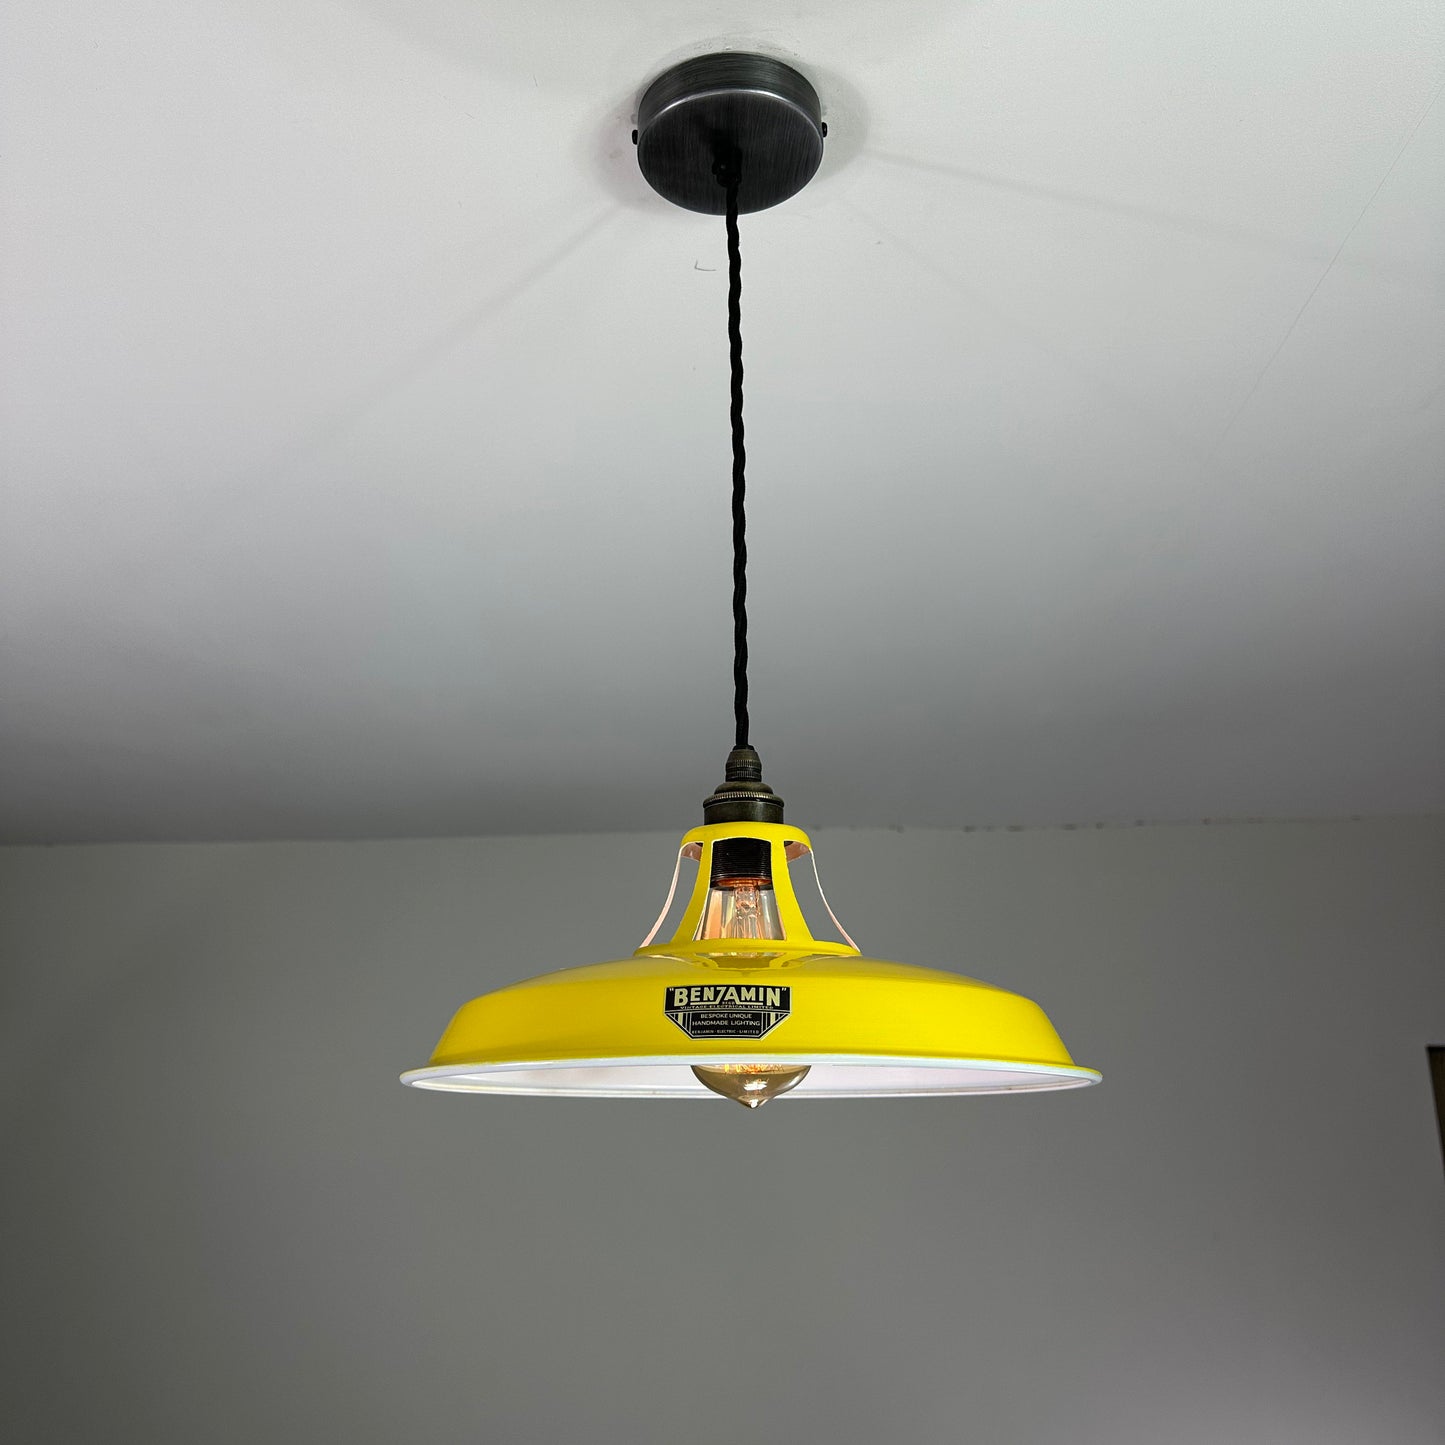 Bramerton ~ Summer Yellow Benflux Industrial Shade 1926 Design Pendant Set Light | Ceiling Dining Room | Kitchen Table | Vintage